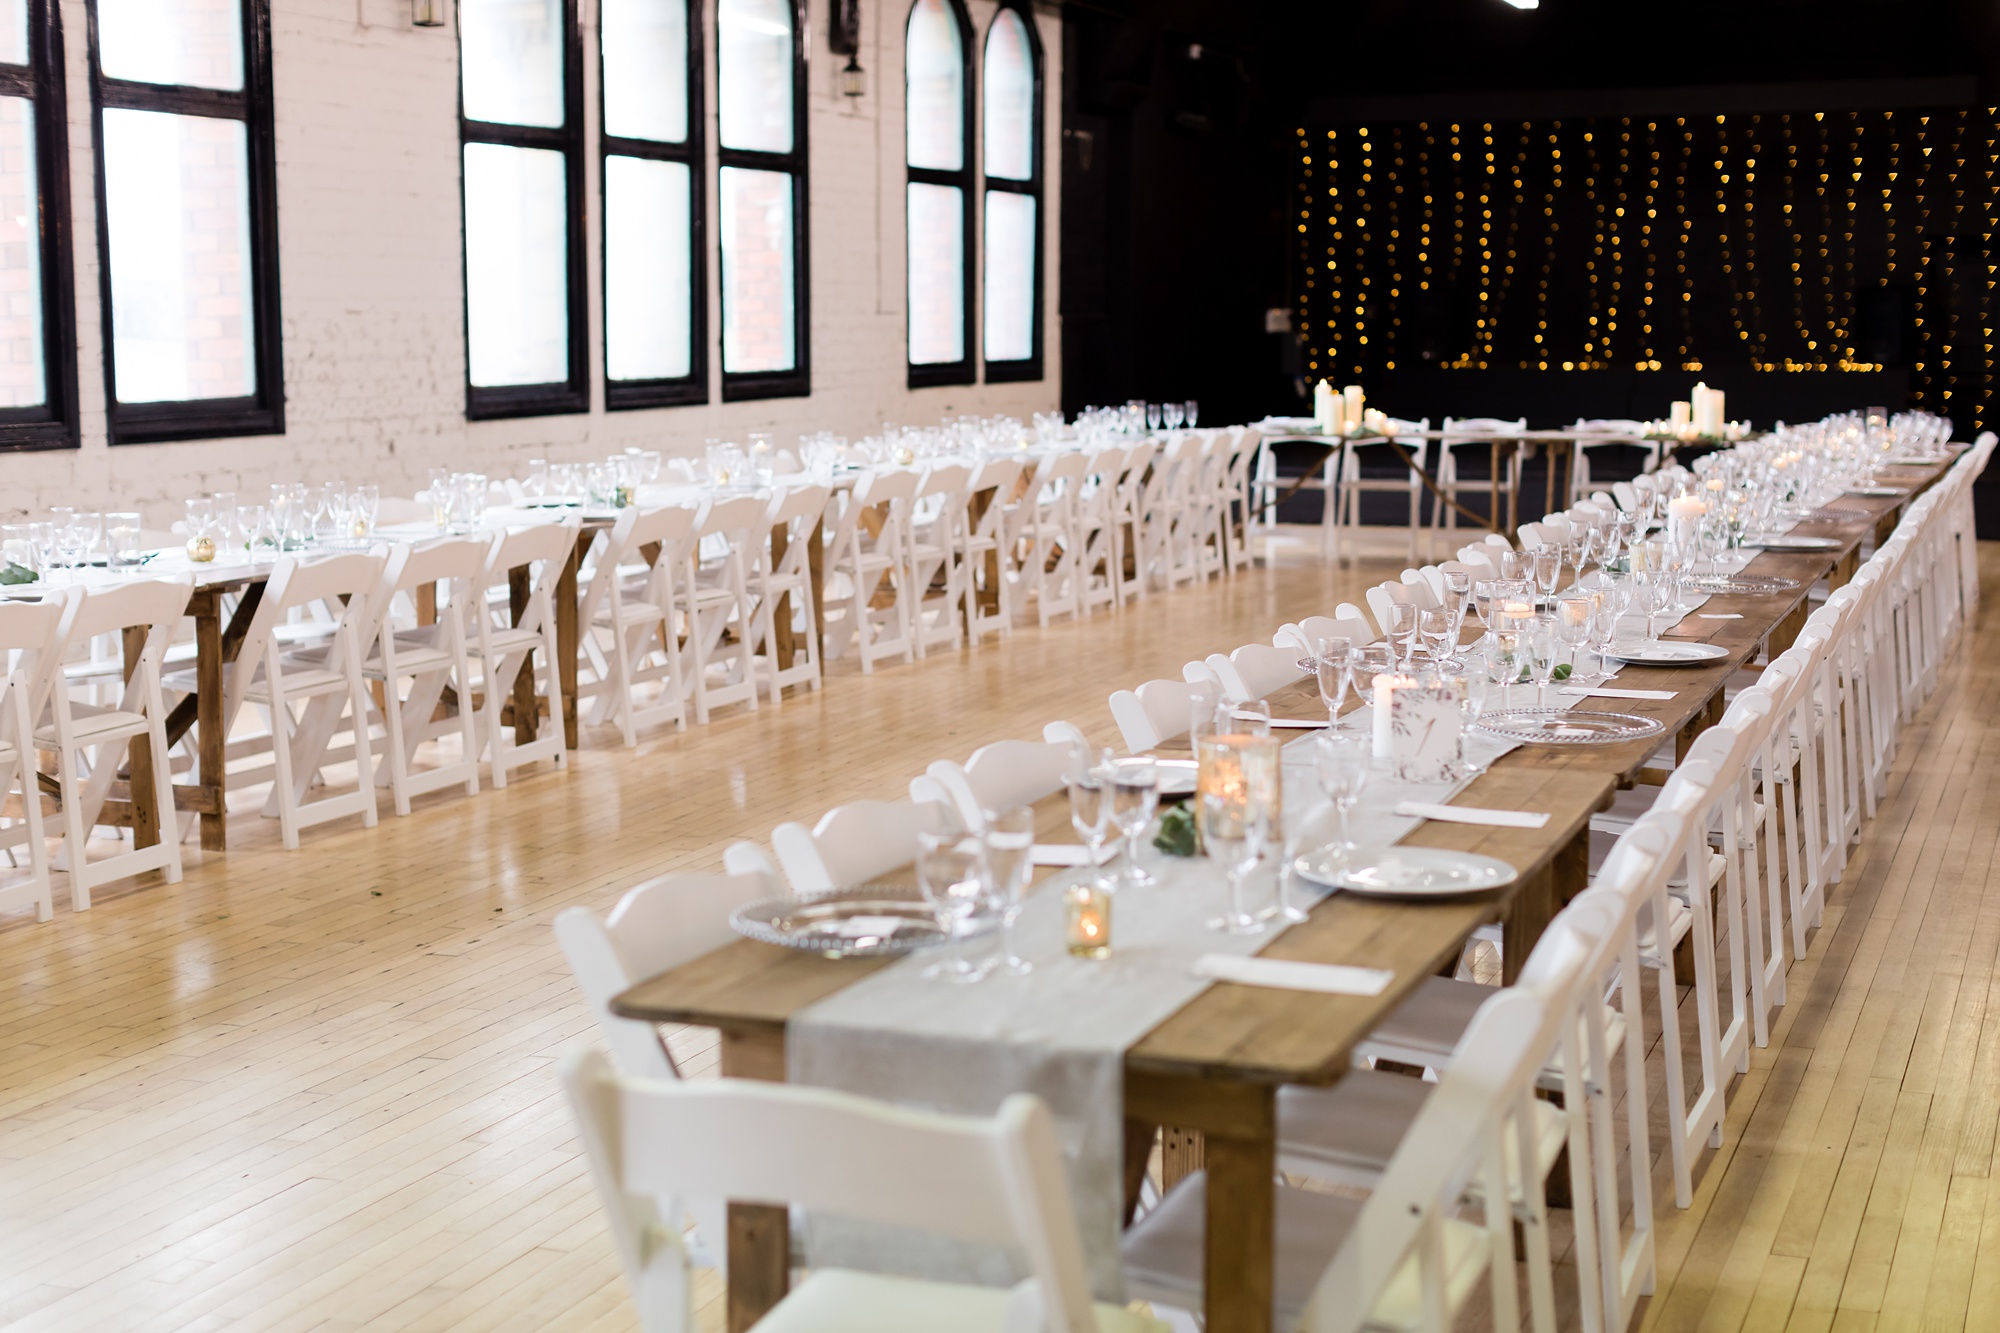 Yorkshire Wedding Venue River Mills Ballroom banquet style tables in ballroom